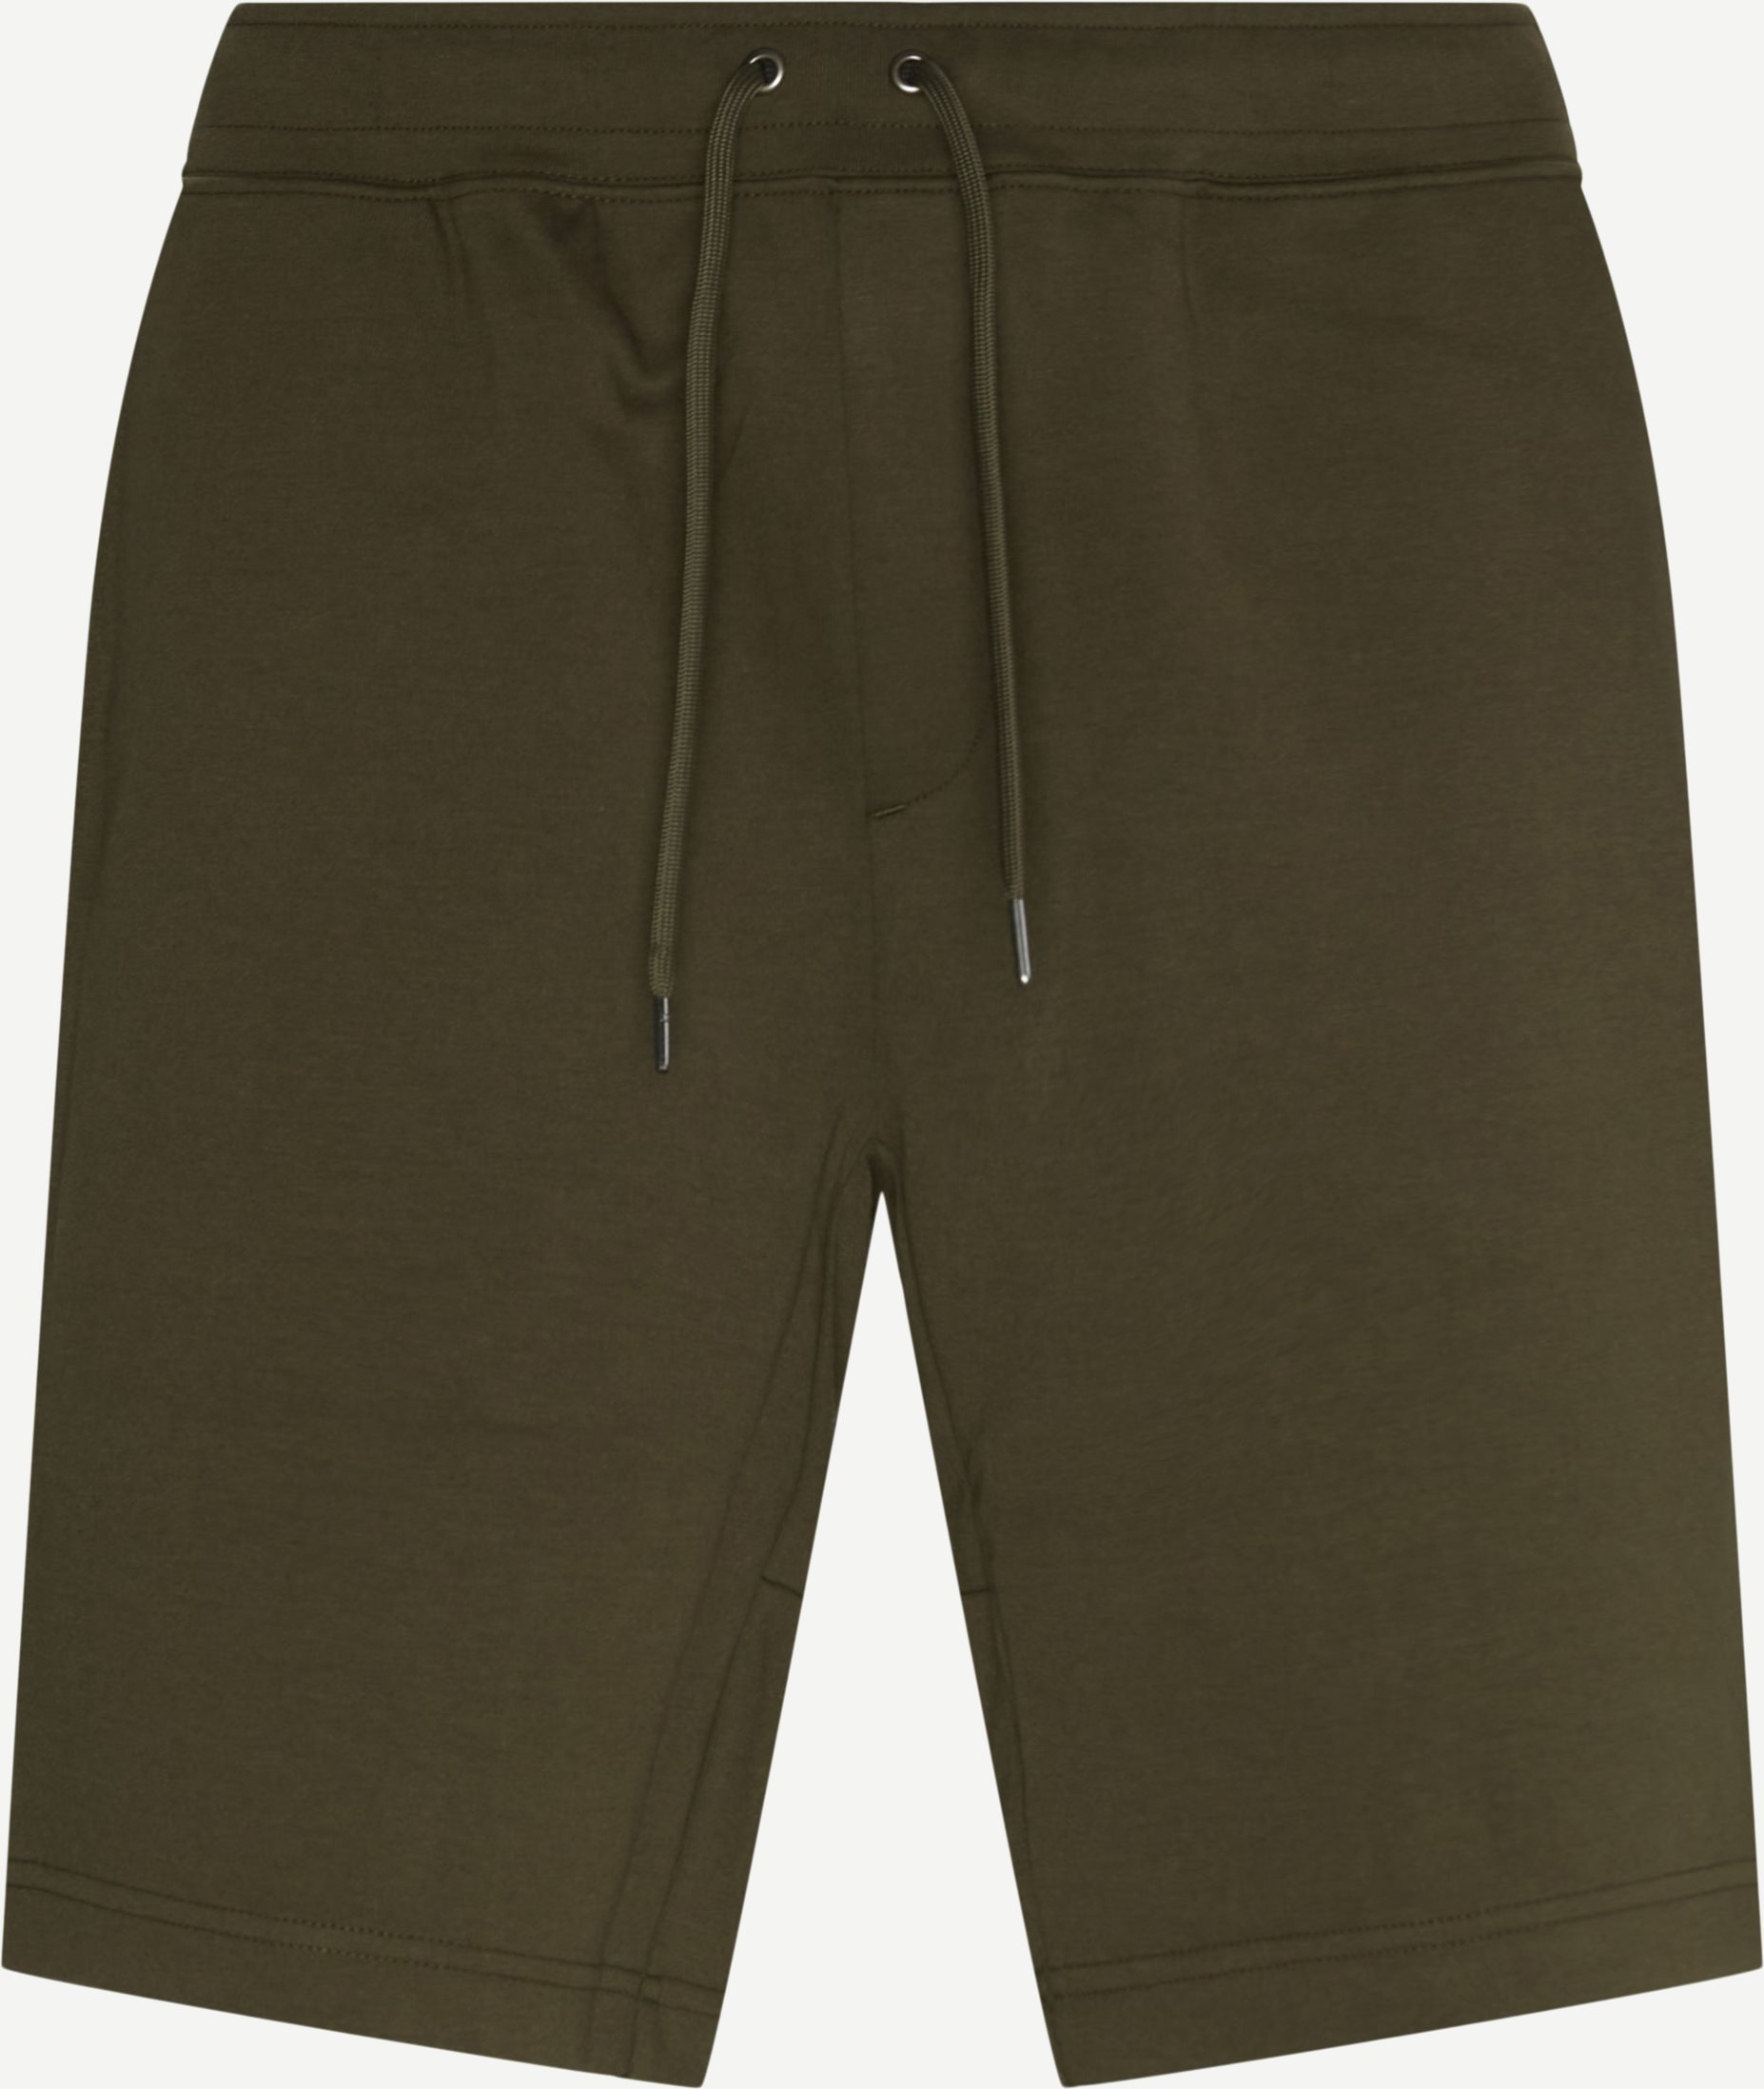 Polo Ralph Lauren Shorts 710691243 Army